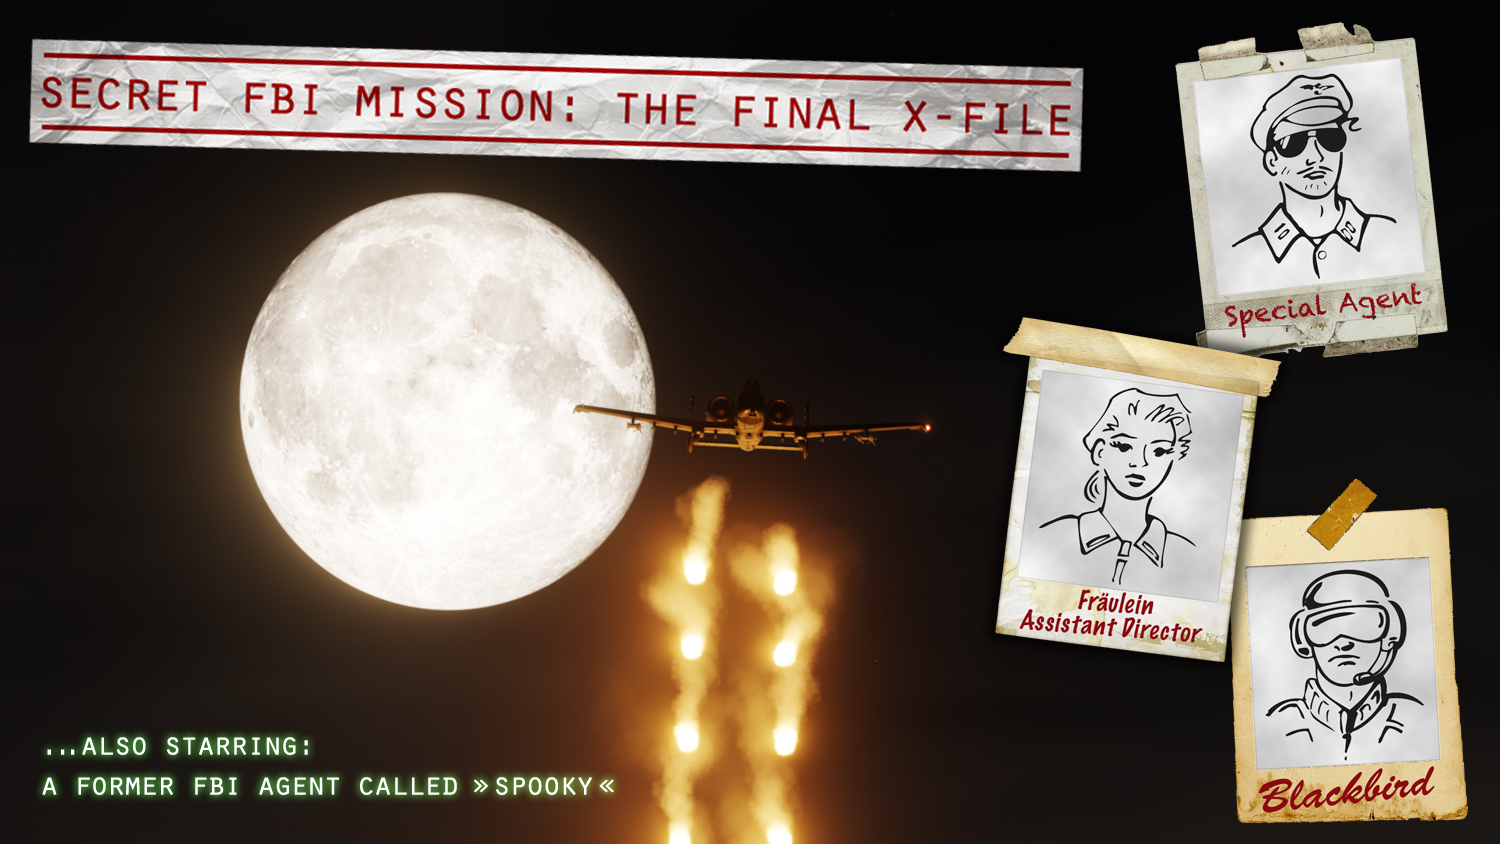 A-10A - Secret FBI Mission: The Final X-File